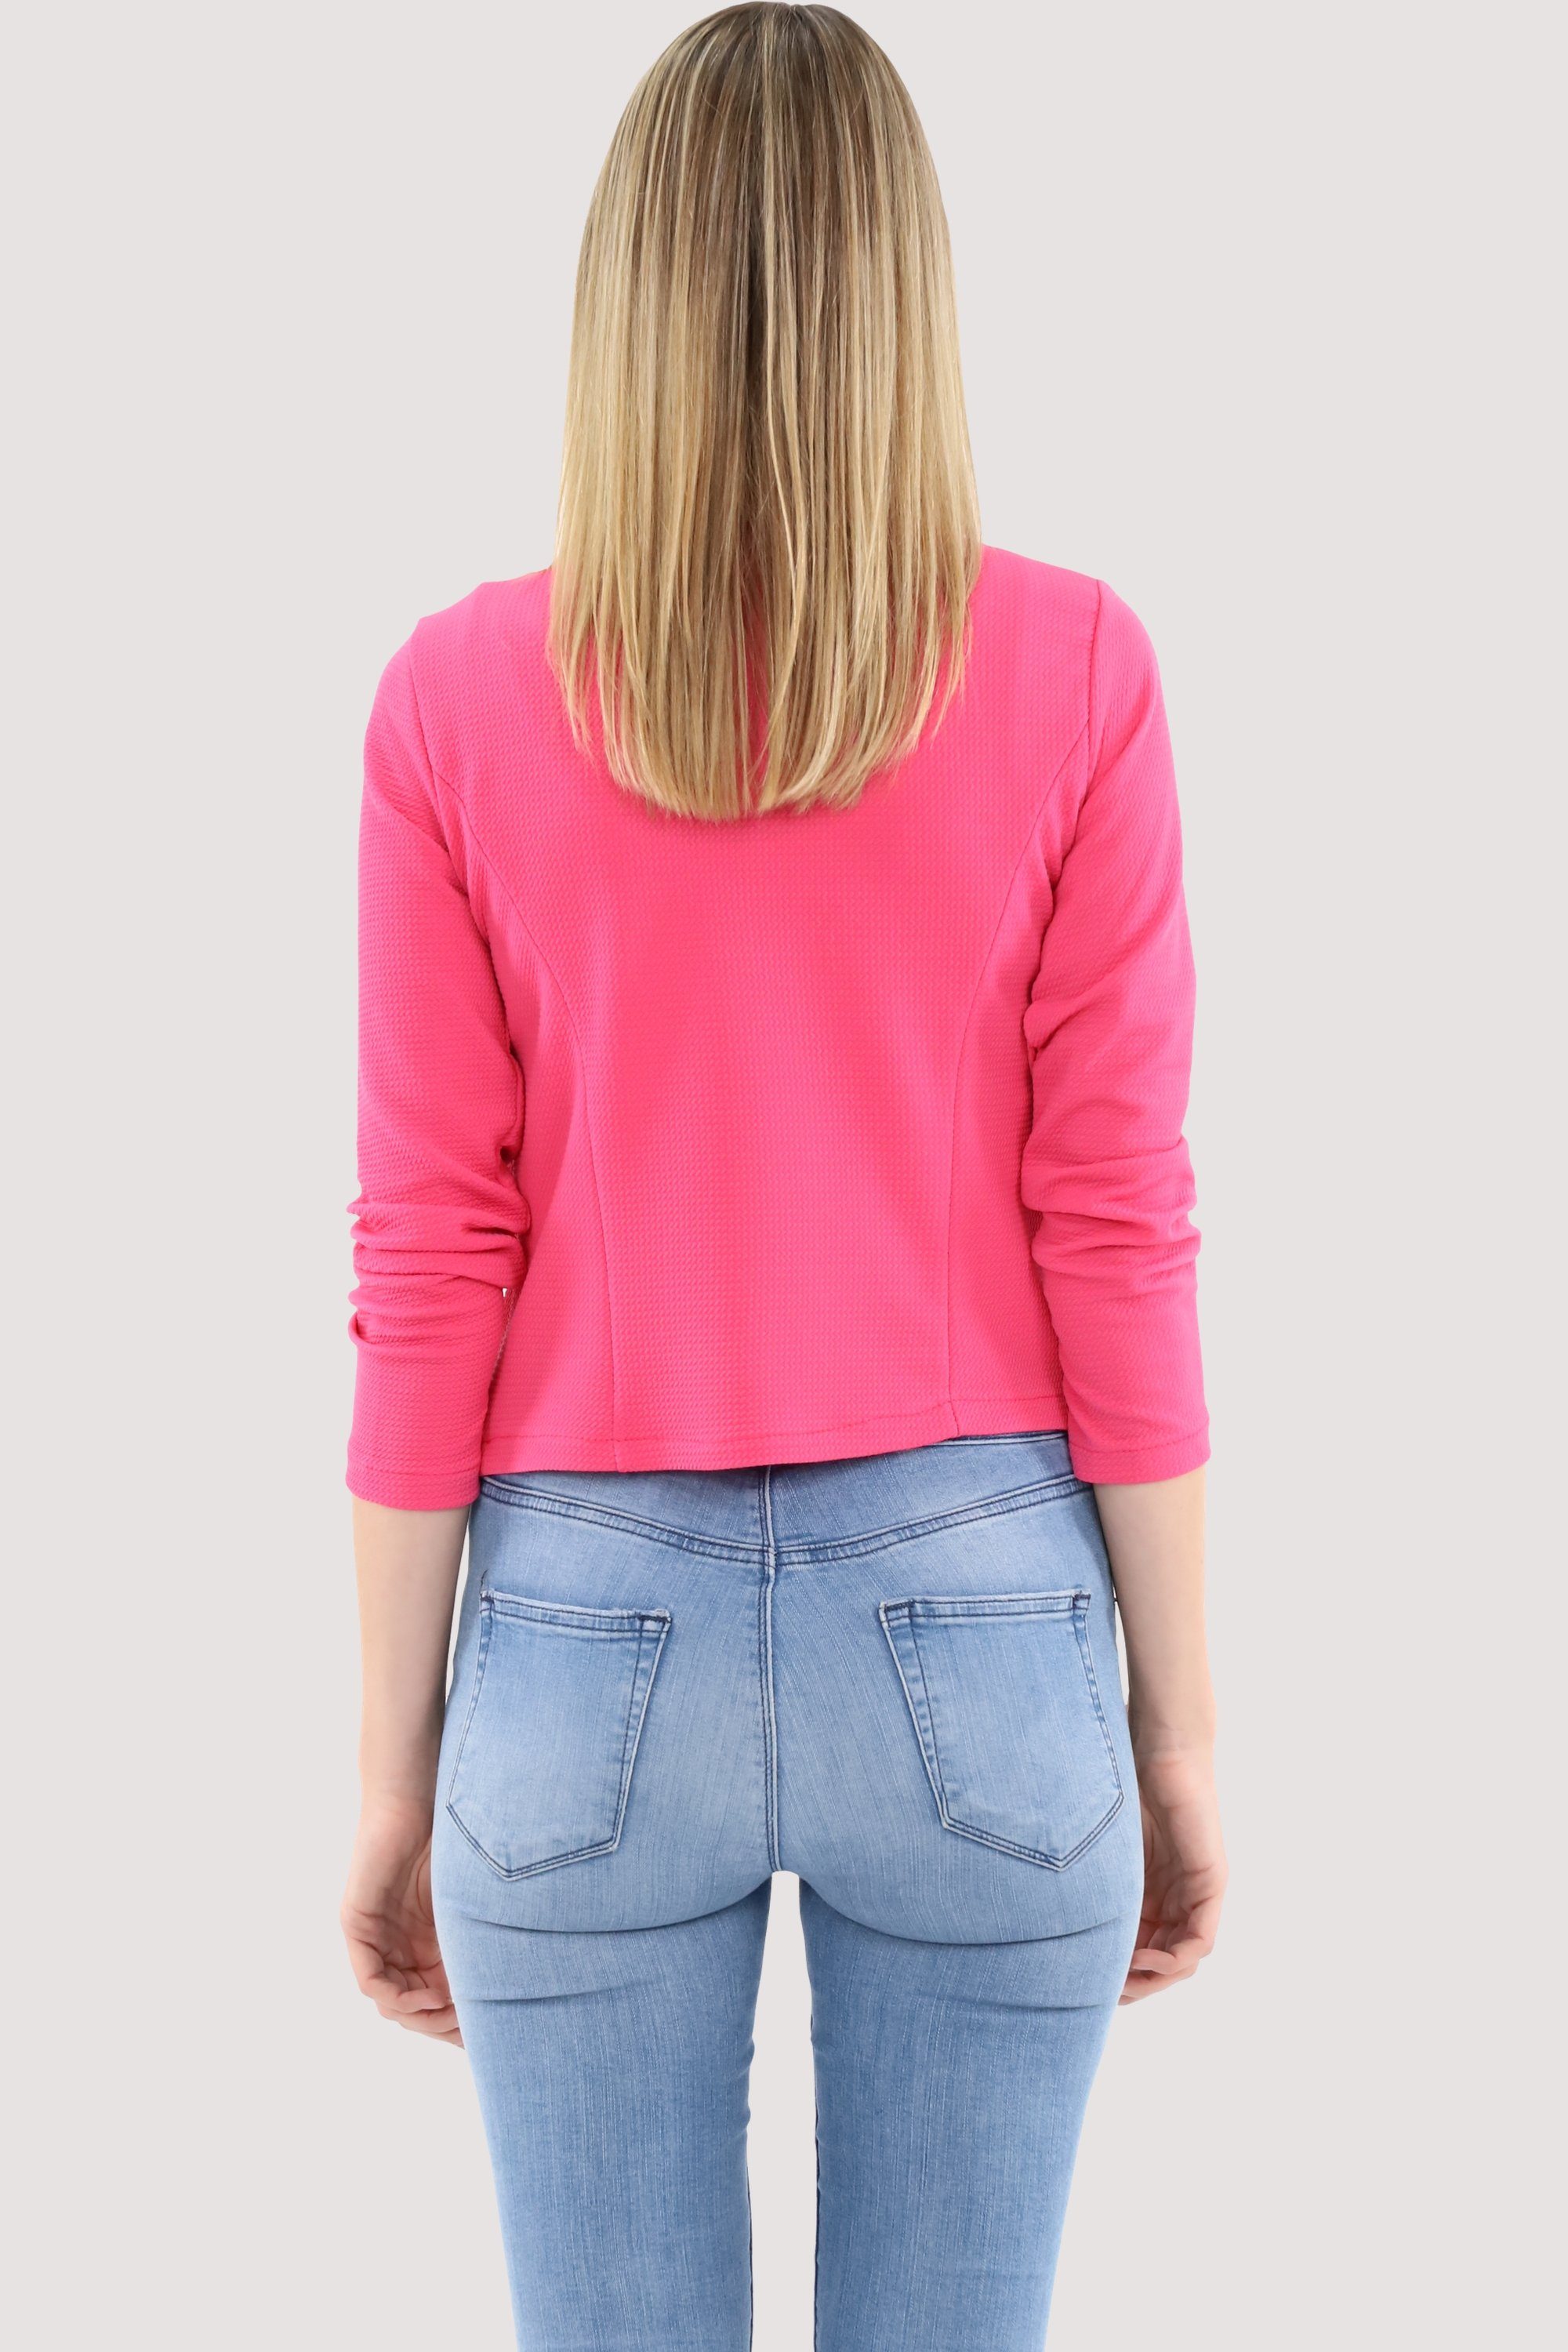 Jackenblazer fashion Sweatblazer Basic-Look pink 6040 more than im malito